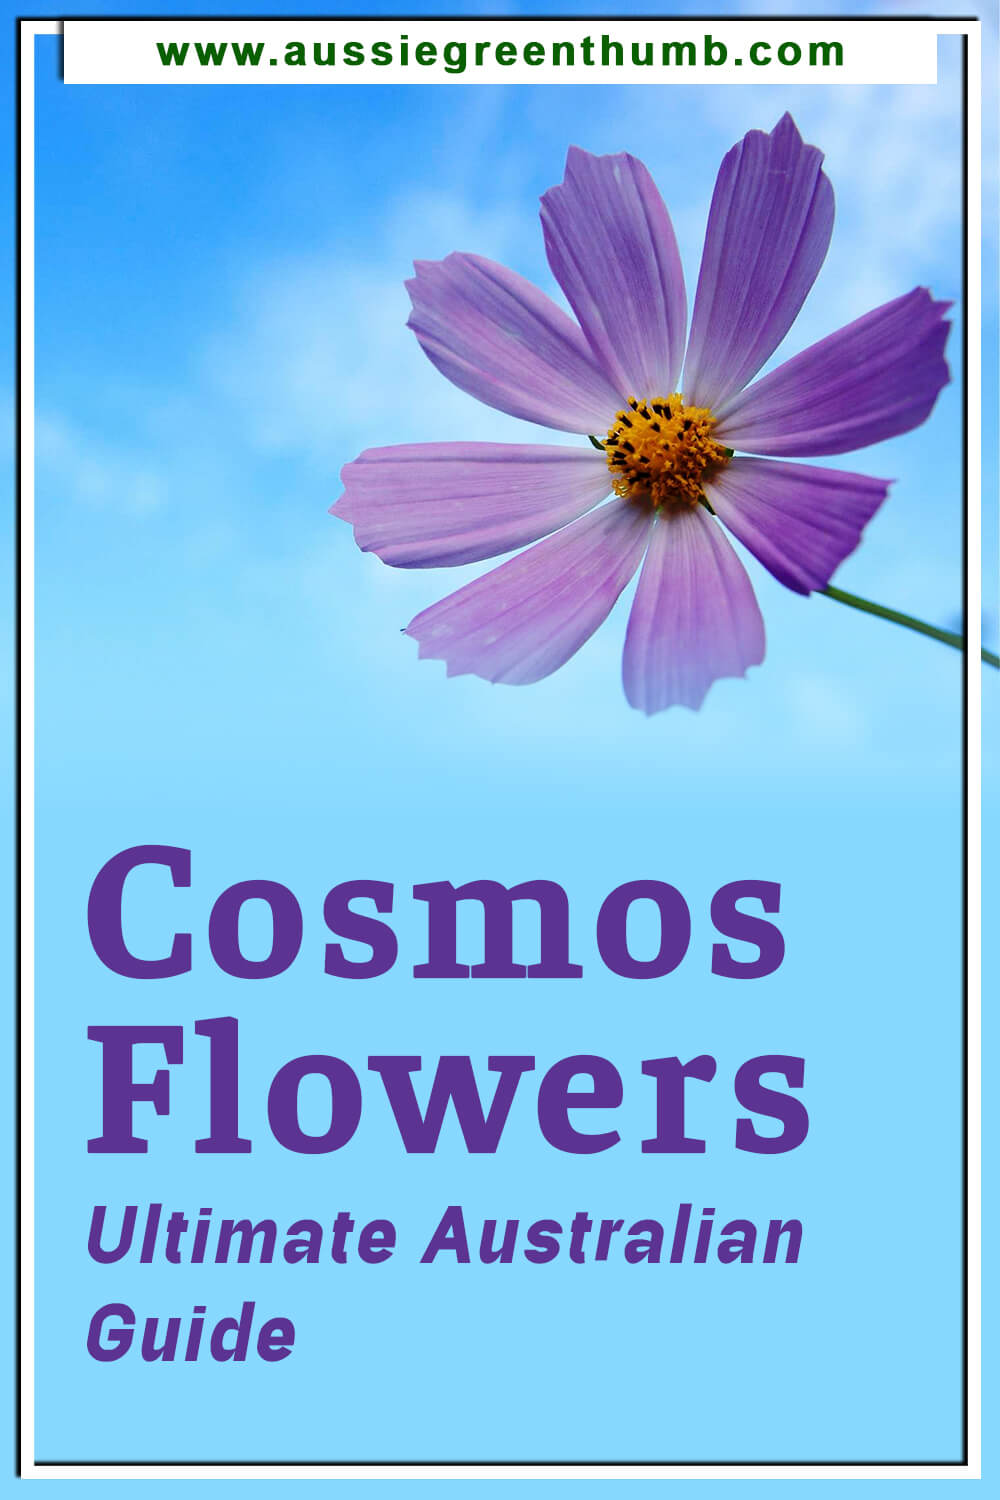 Cosmos flowers – Ultimate Australian Guide